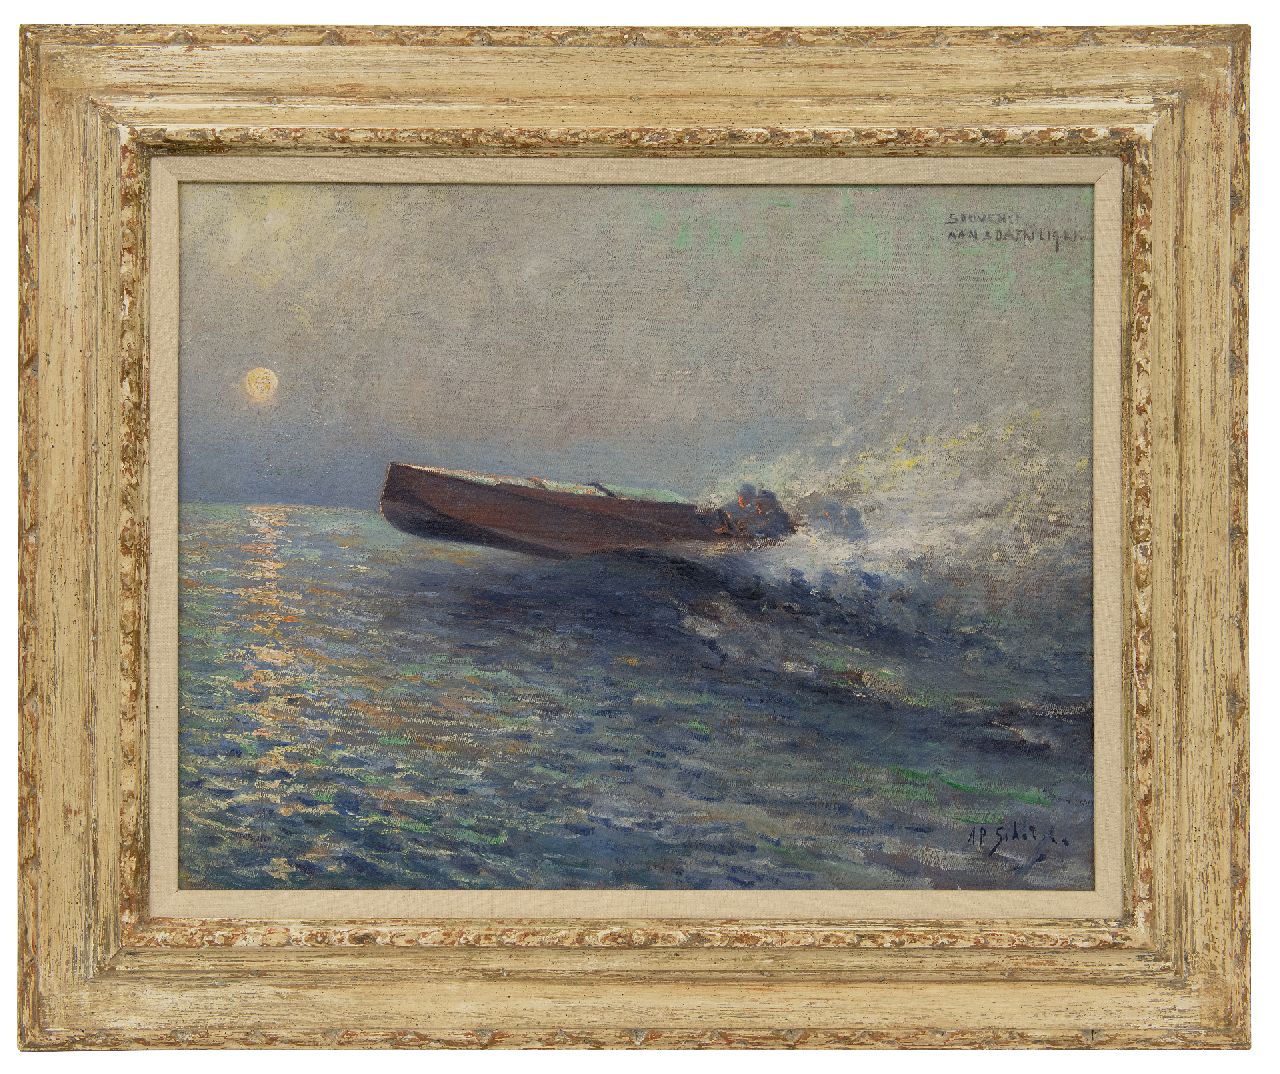 Schotel A.P.  | Anthonie Pieter Schotel, Speedboat at sea at sunset, oil on canvas 43.6 x 57.3 cm, signed l.r.